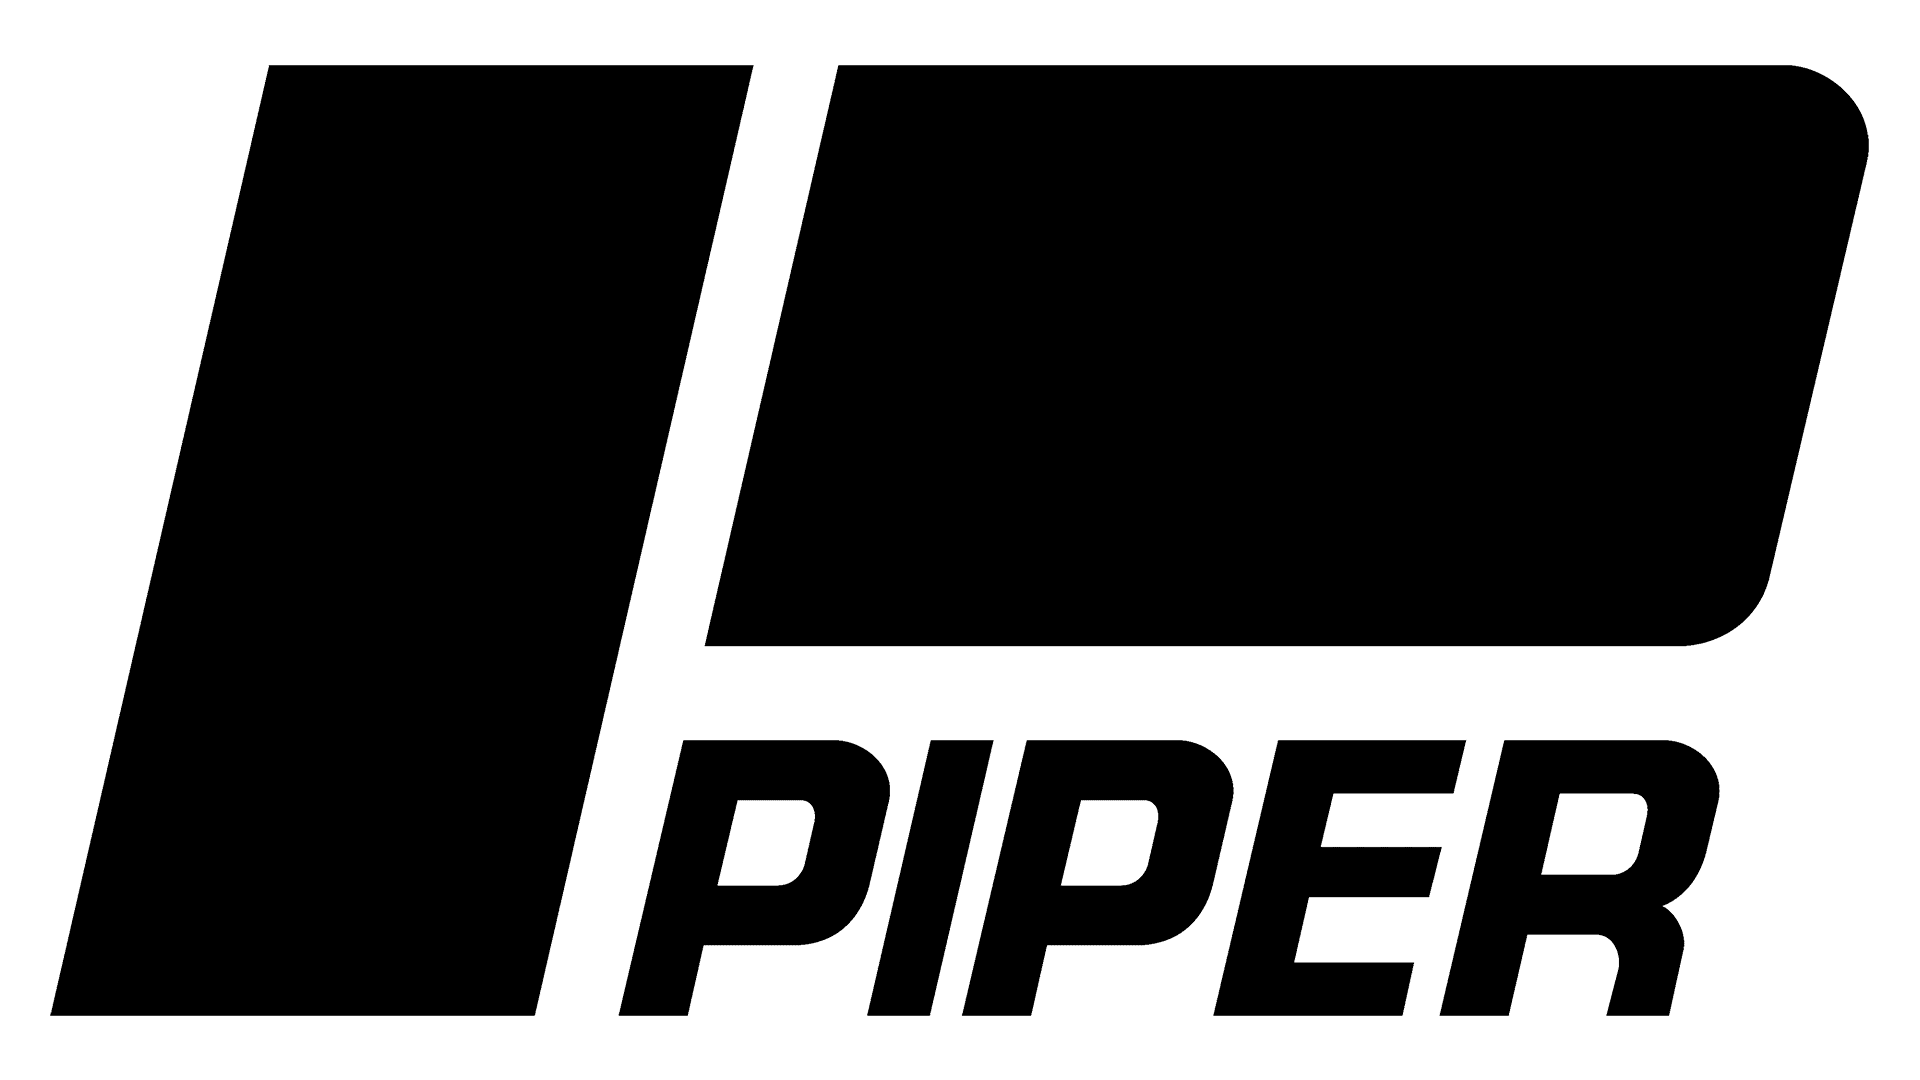 Dla Piper logo. Dla Piper Rus Limited логотип. Piper Pipe logo. Дла Пайпер рус Лимитед. Stc group